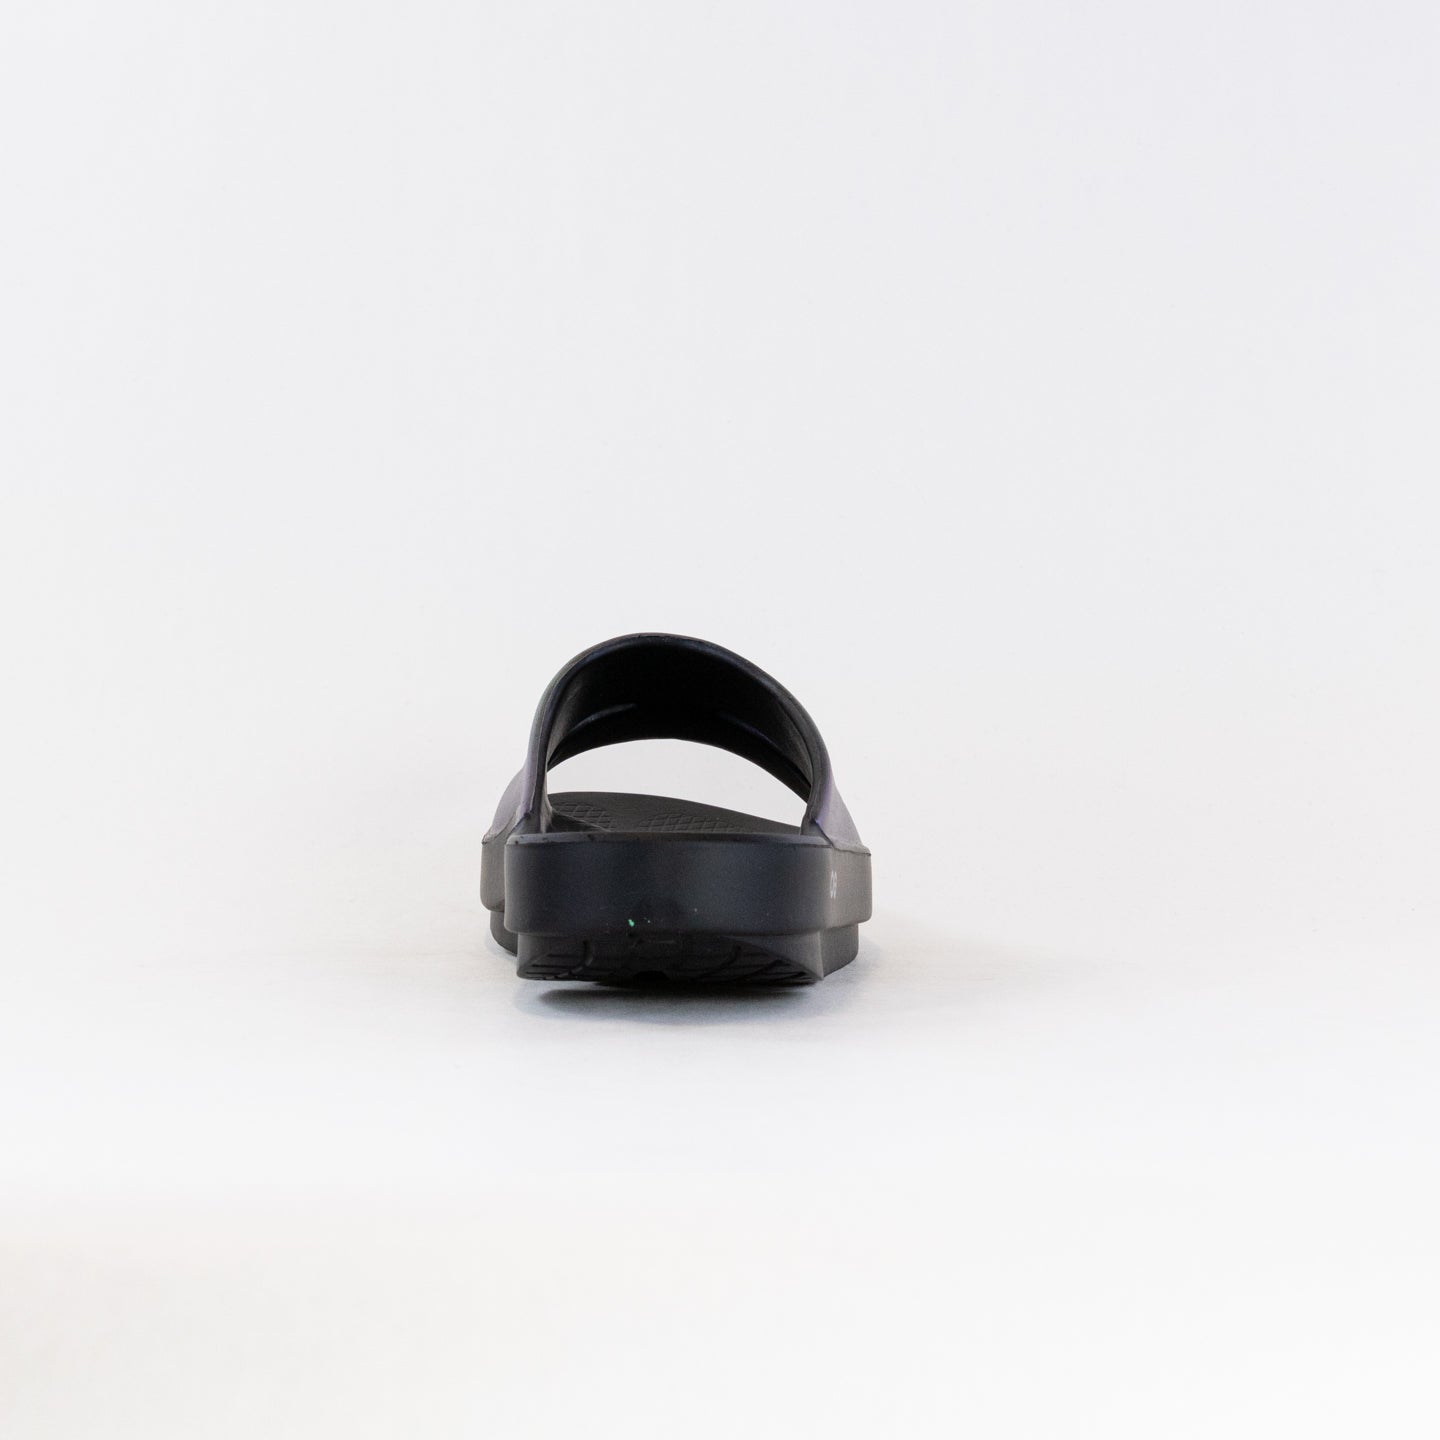 OOFOS OOahh Luxe Slide Sandal (Women's) - Midnight Spectre